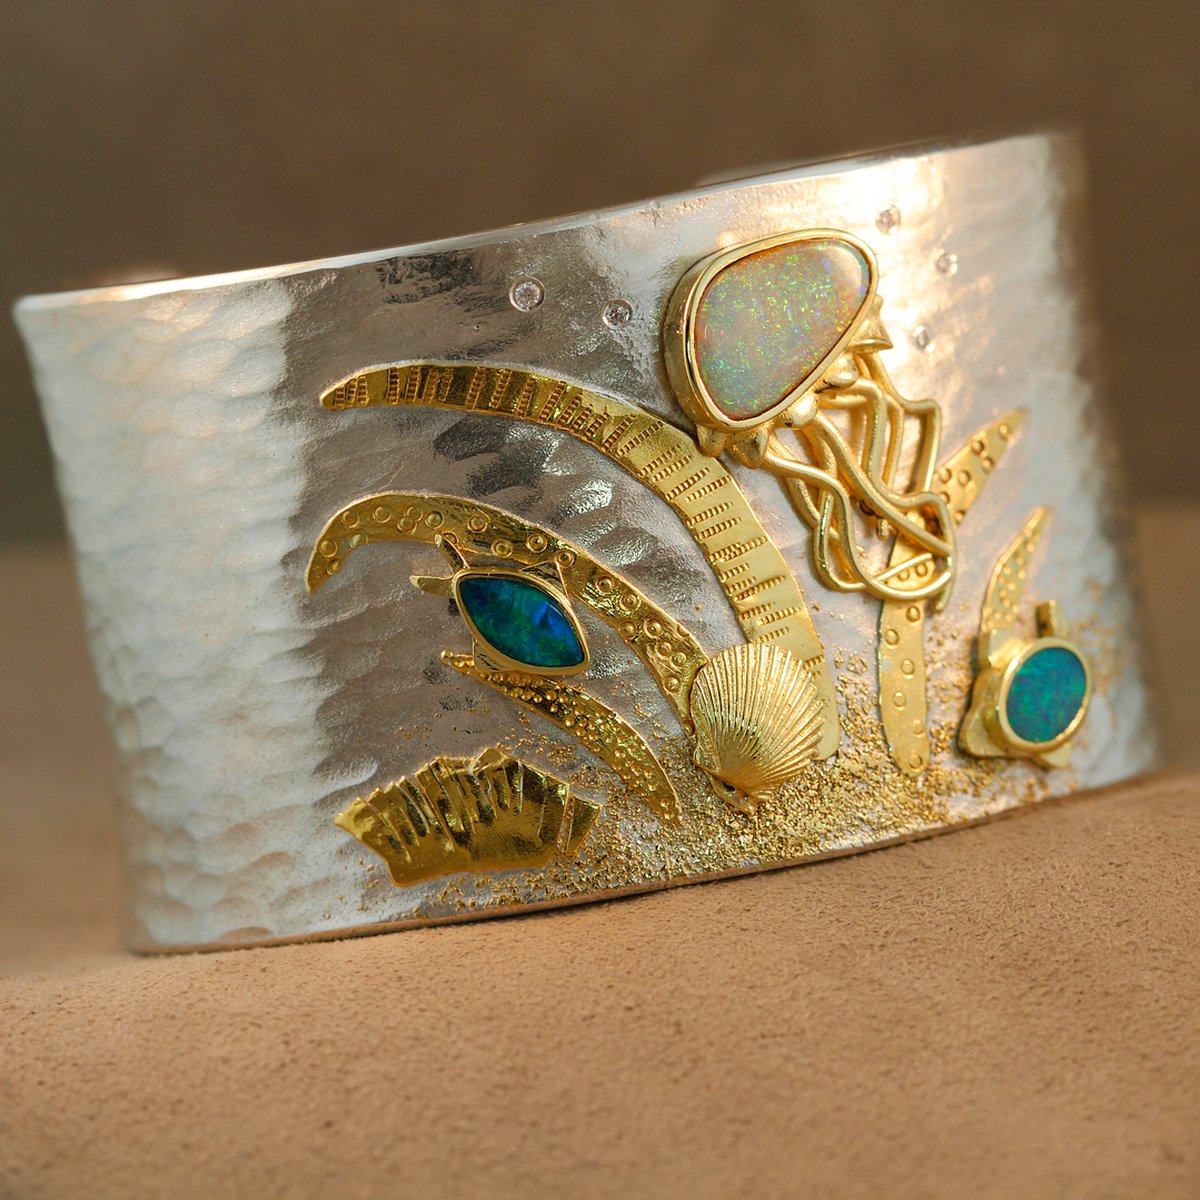 Seascape Cuff Bracelet #14, Argentium Silver, 22k and 18k golds, Opal and Diamond